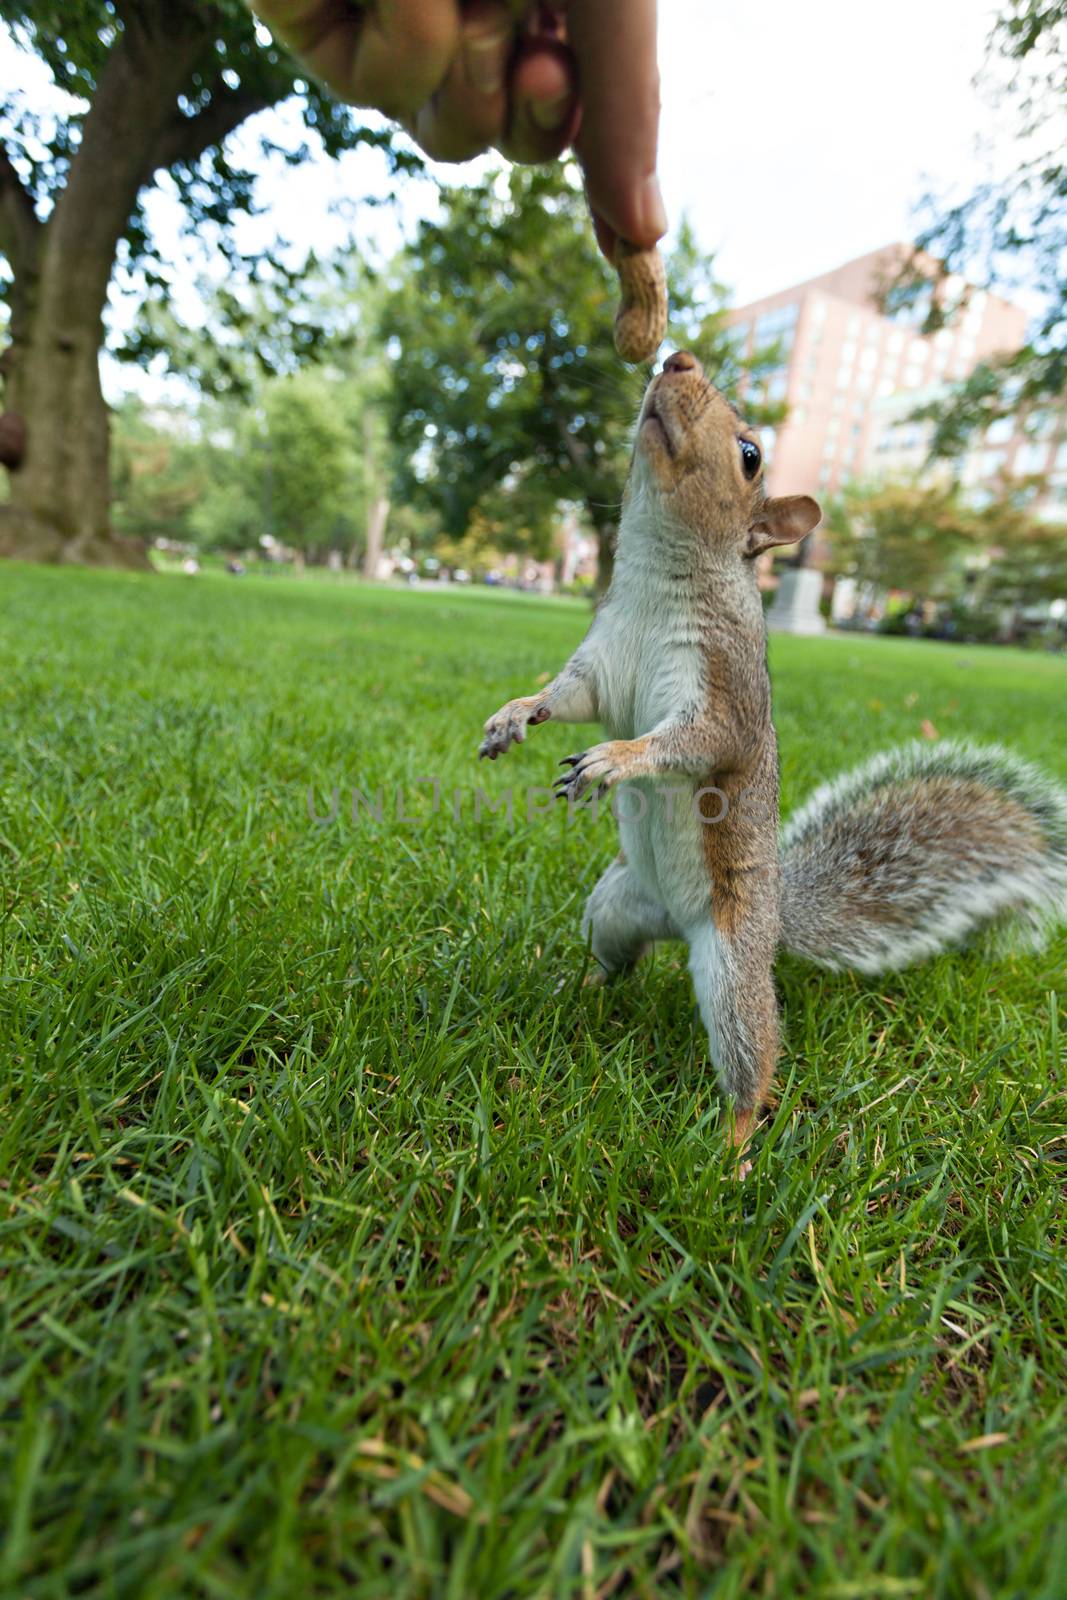 Feeding a wild squrrel a peanut in a public park located in Boston Massachusetts.